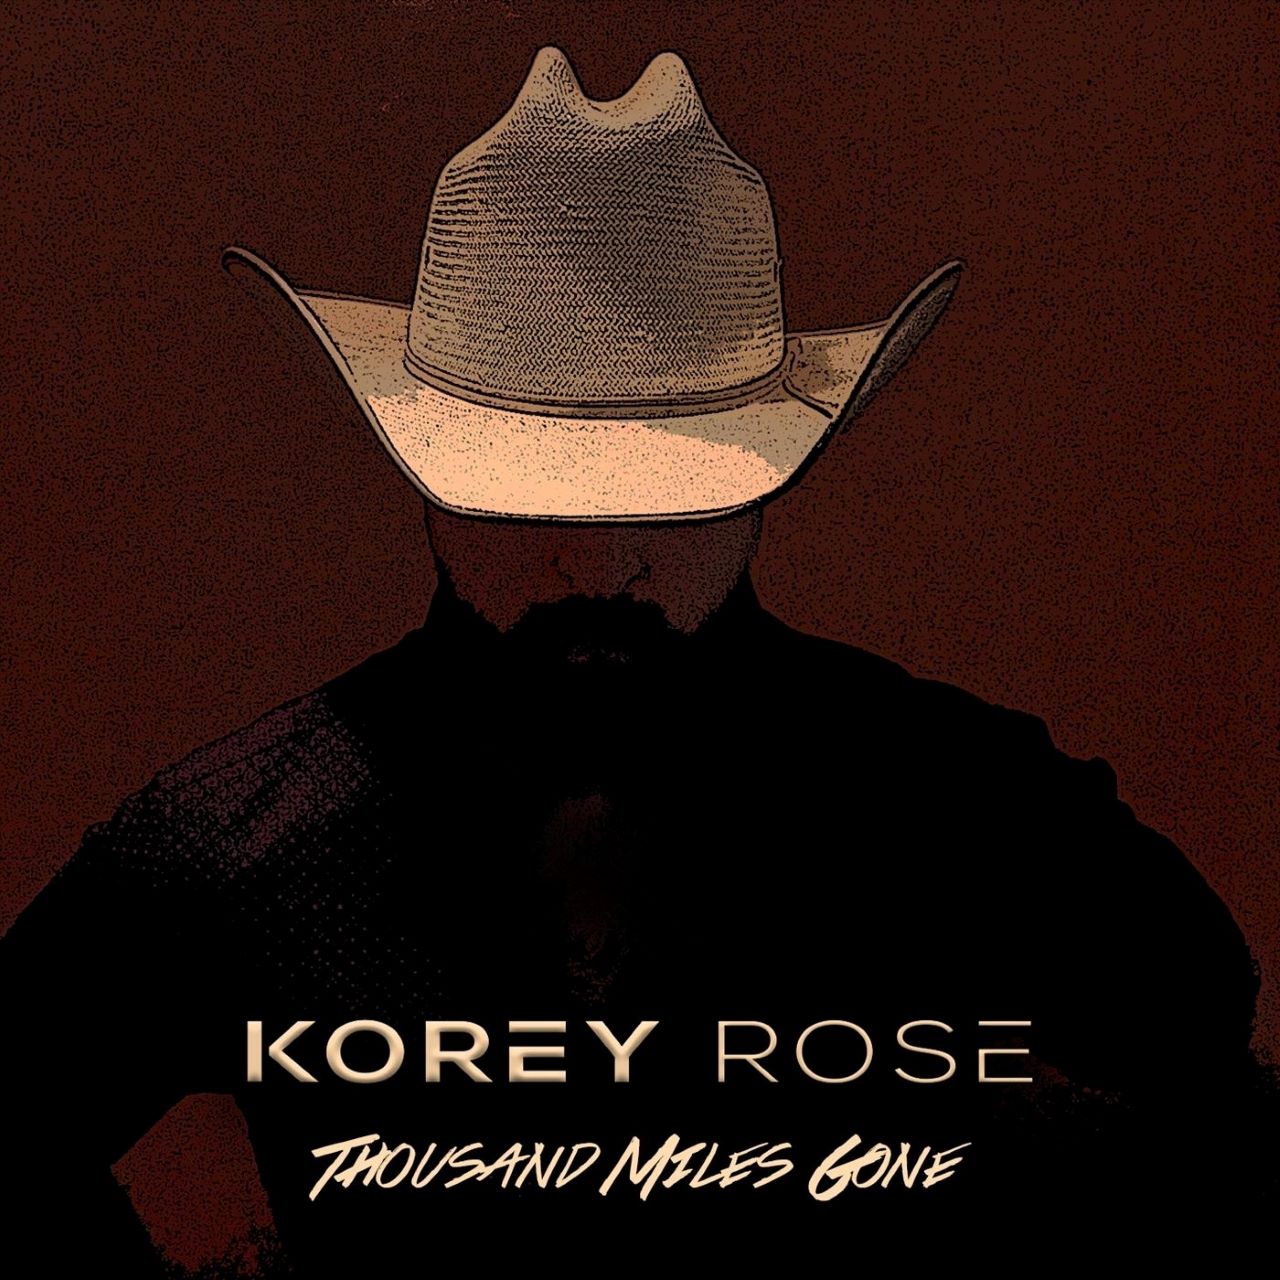 Korey Rose – Thousand Miles Gone cover album